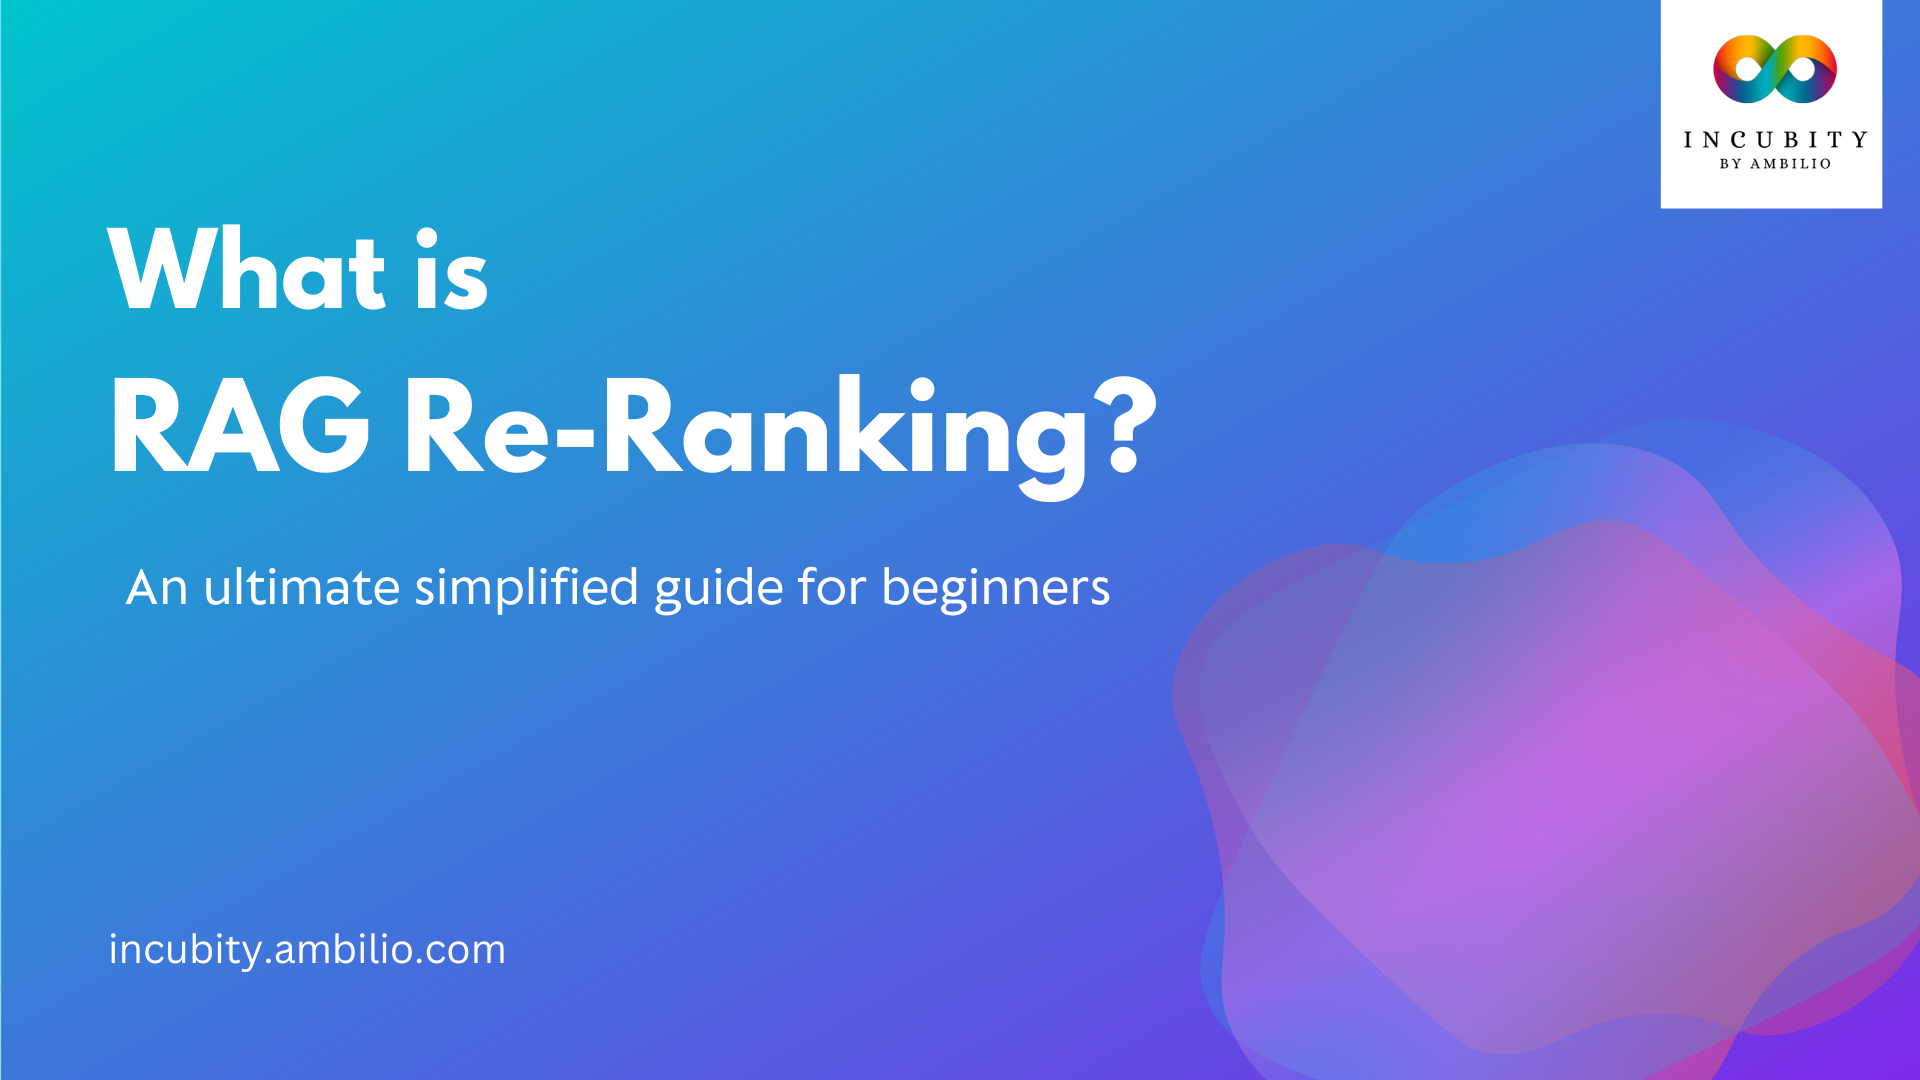 RAG Re-Ranking